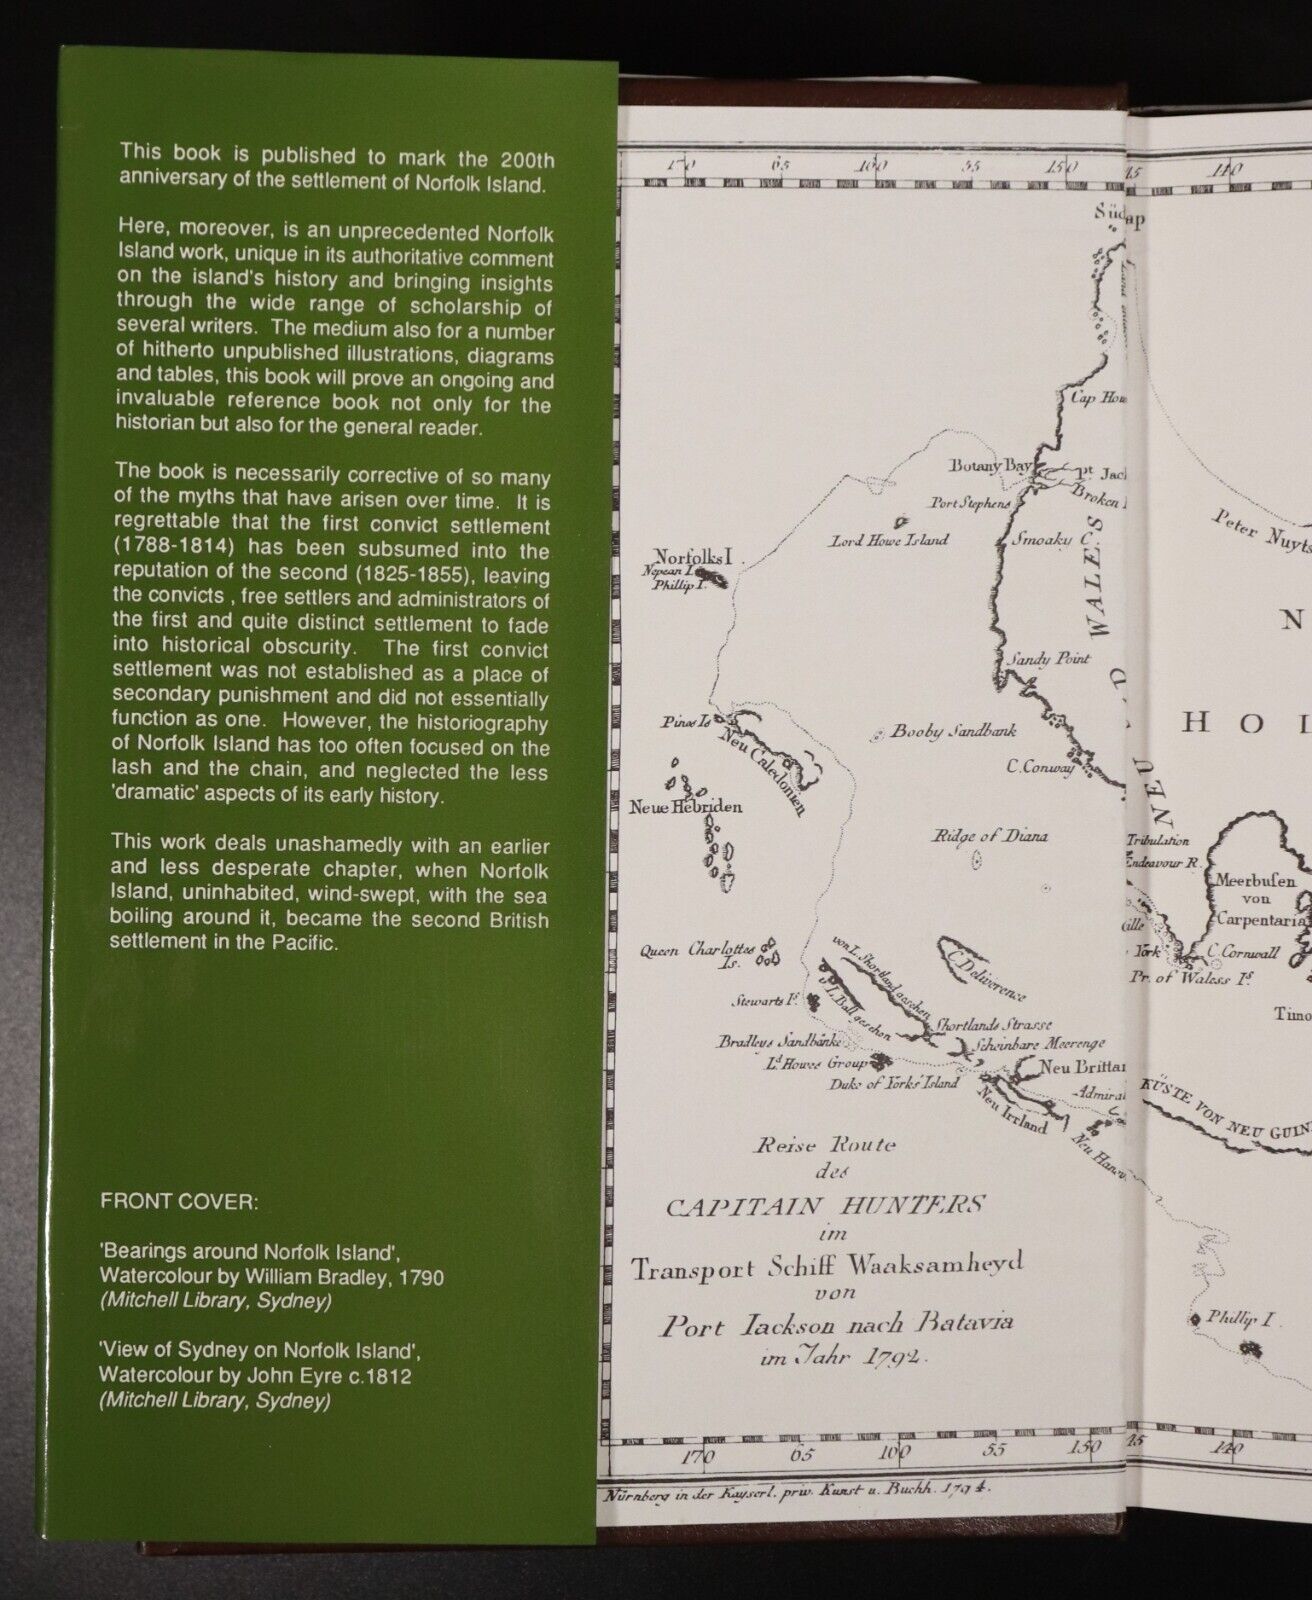 1988 Norfolk Island First Settlement 1788 - 1814 Australian Convict History Book